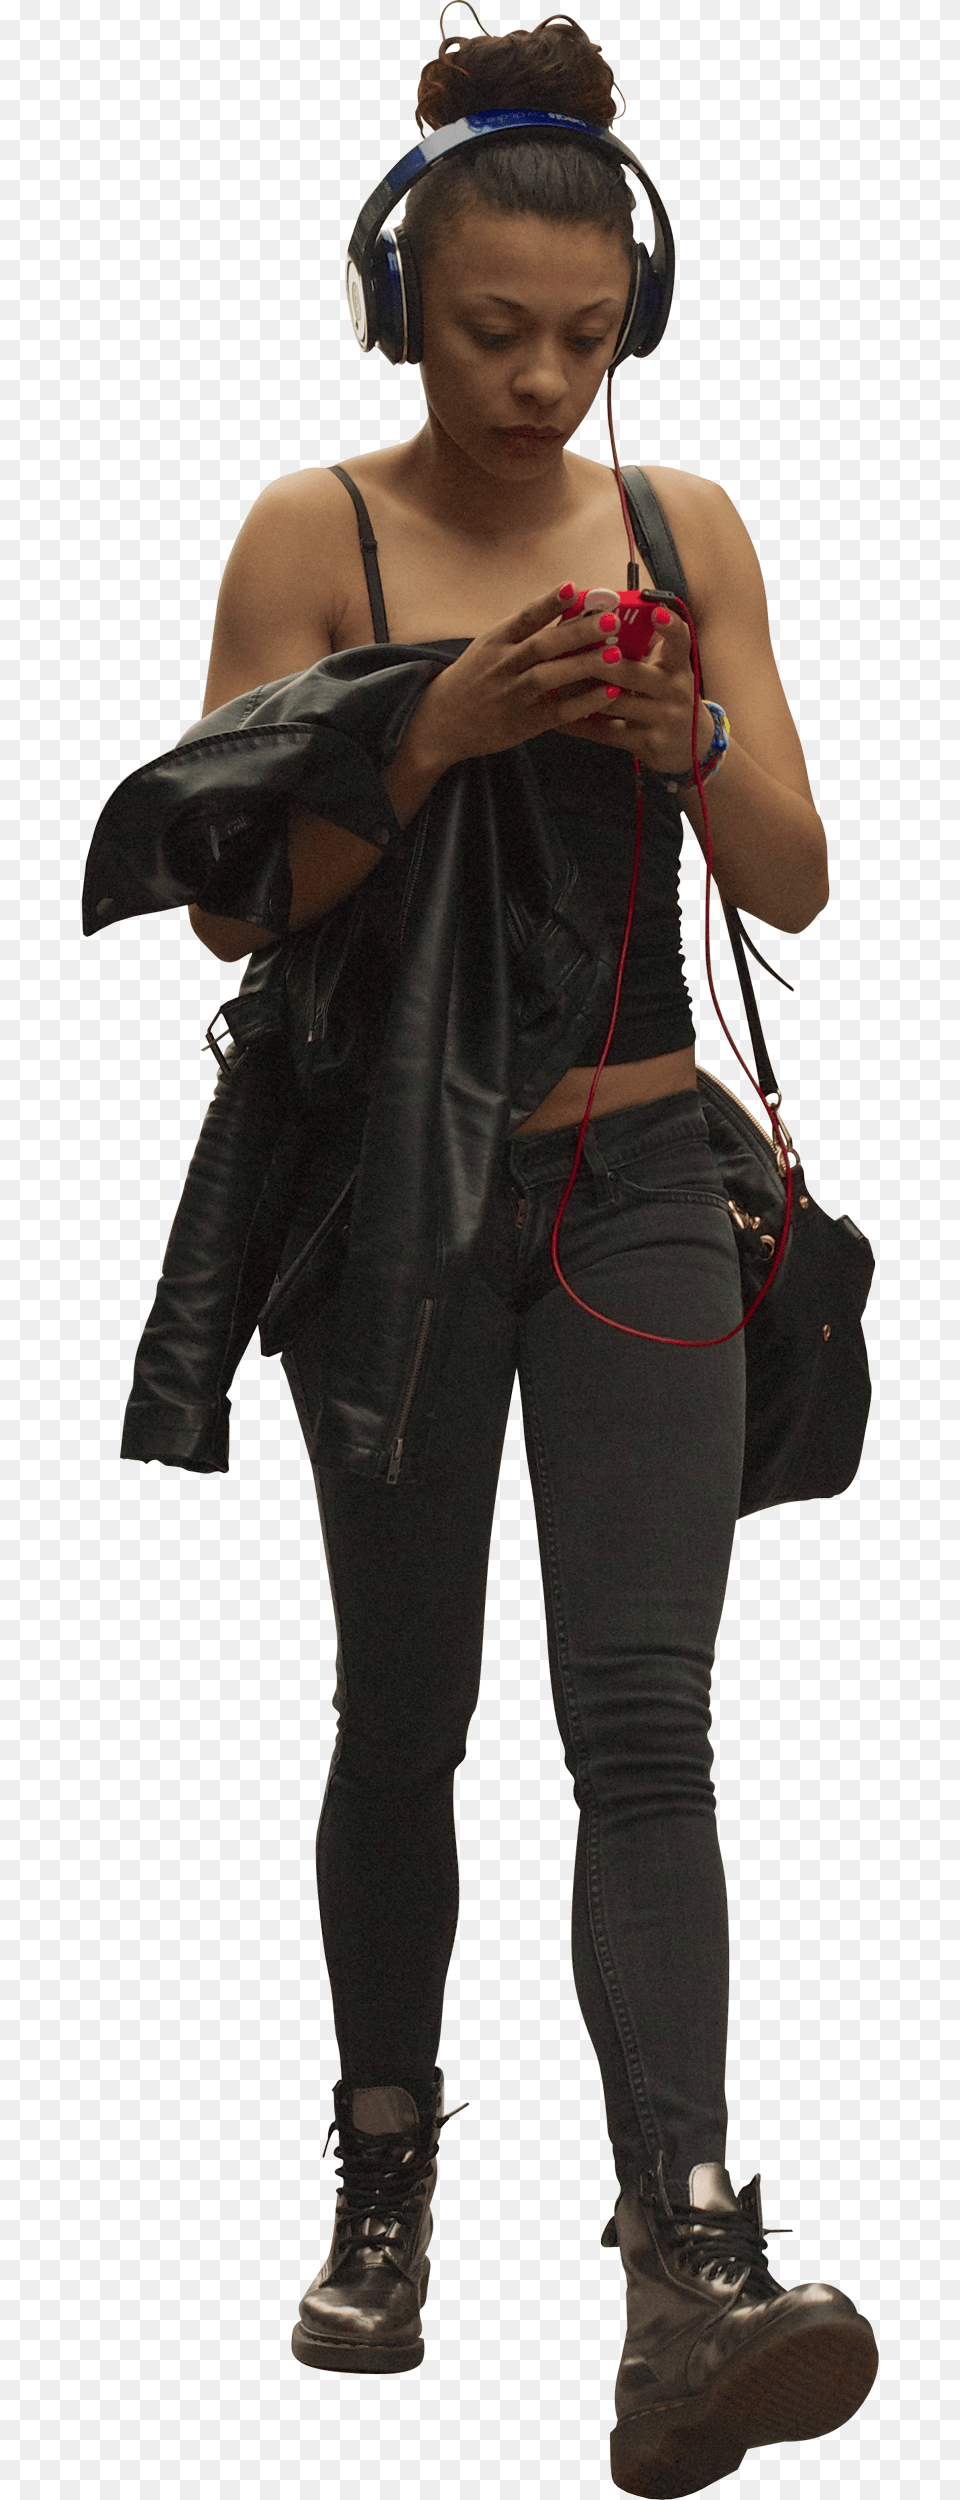 Black Woman Walking, Footwear, Electronics, Headphones, Clothing Free Png